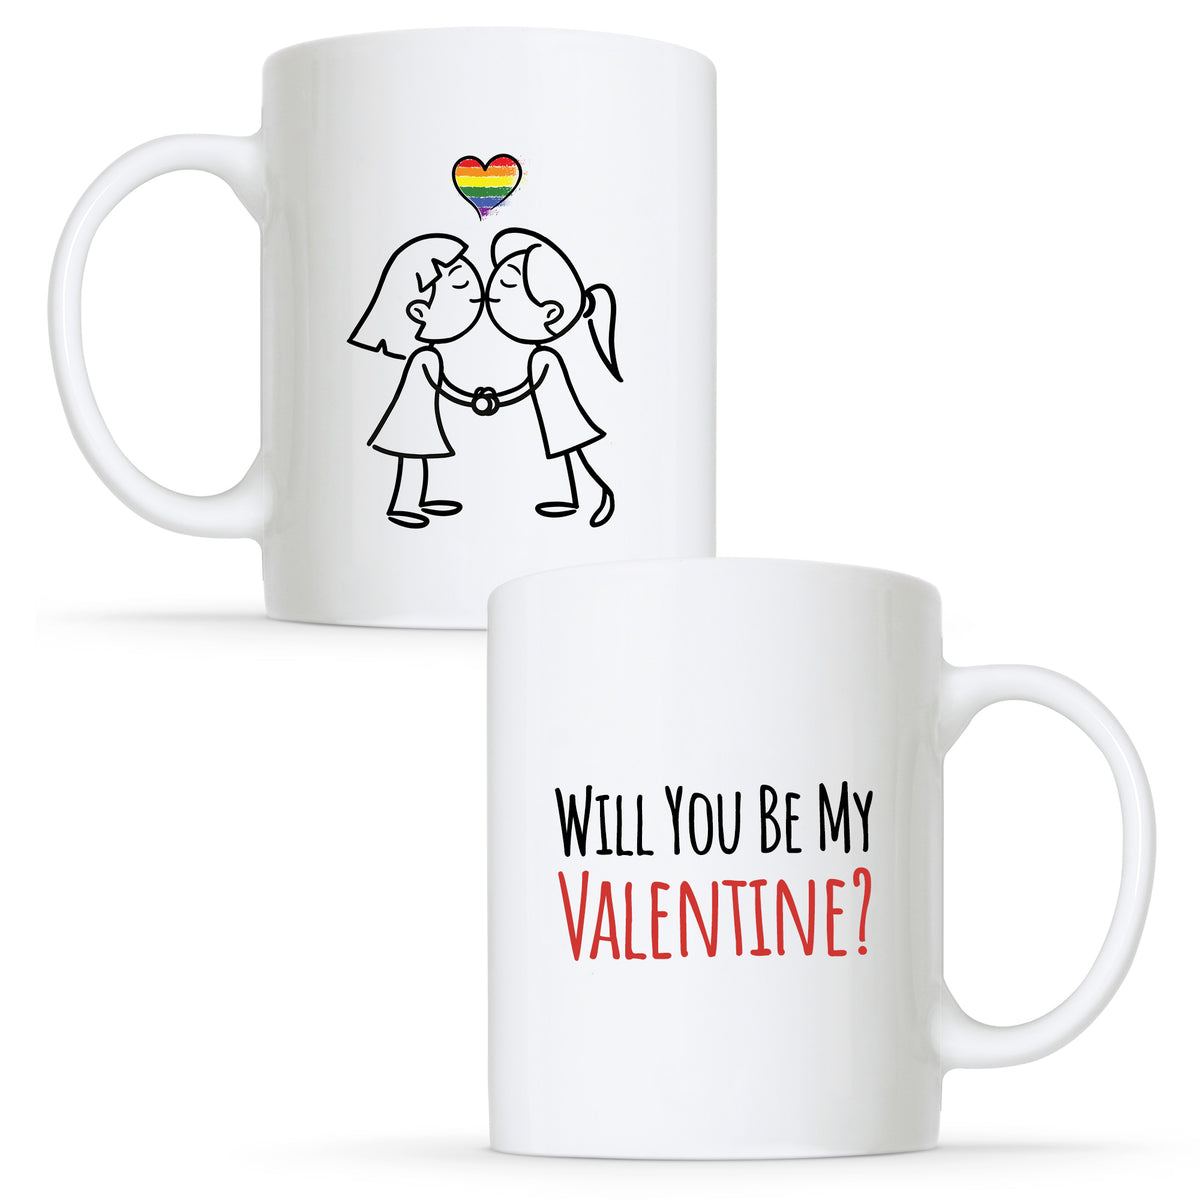 Be My Valentine - Lesbian Gay Couple Mug Set | Gift